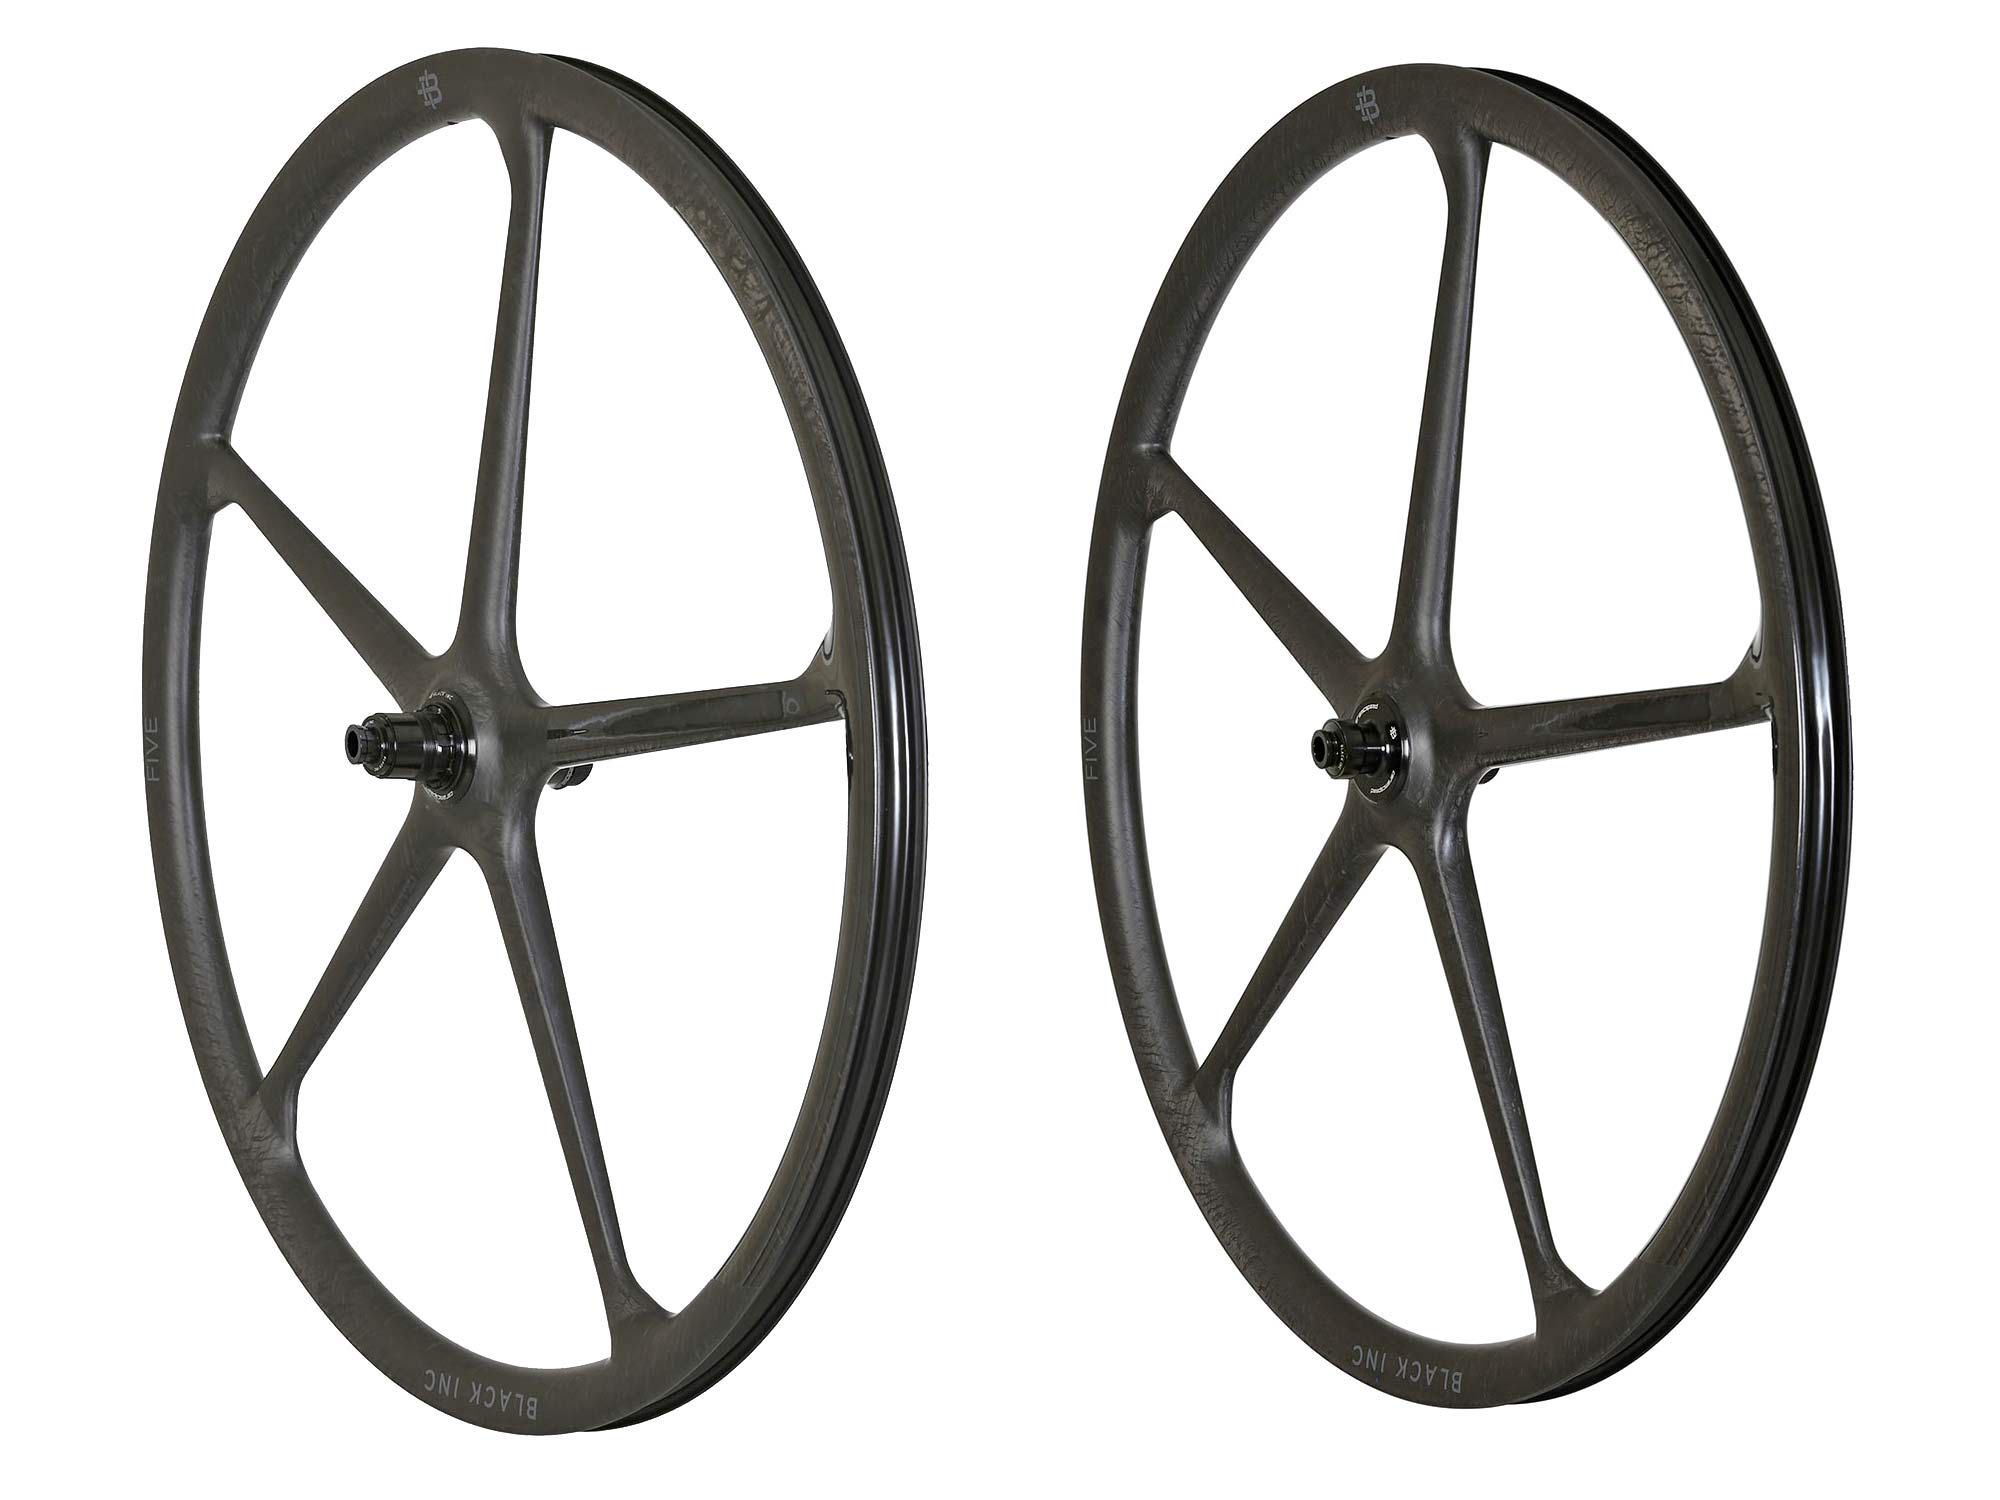 Black Inc FIVE aero carbon 5-spoke tubeless disc brake road bike wheels, angled pair